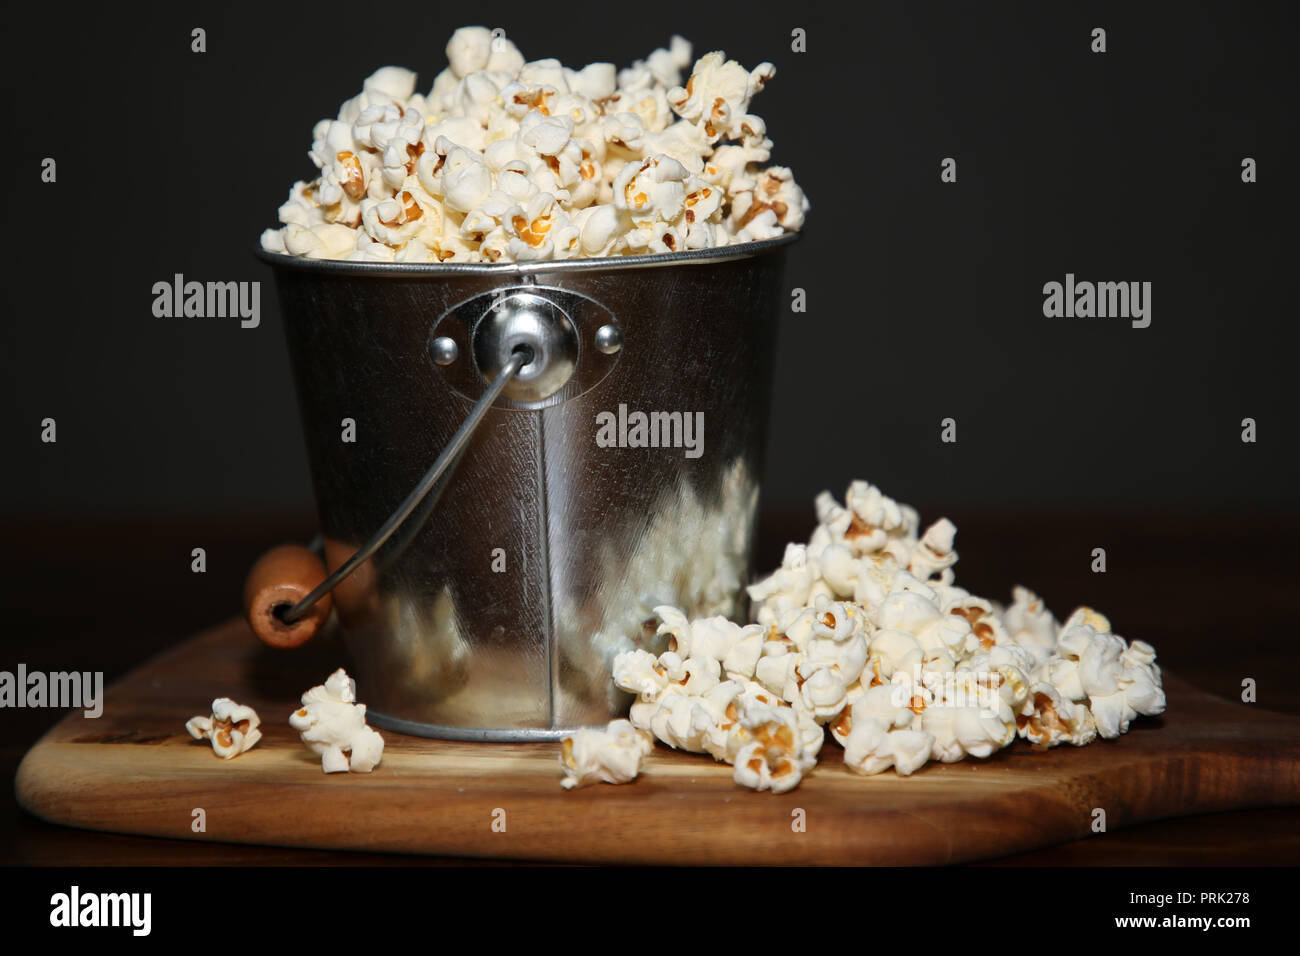 Pictured: popcorn at Jack & Knife restaurant at 76 Stanley St, Darlinghurst, Sydney, Australia. Stock Photo